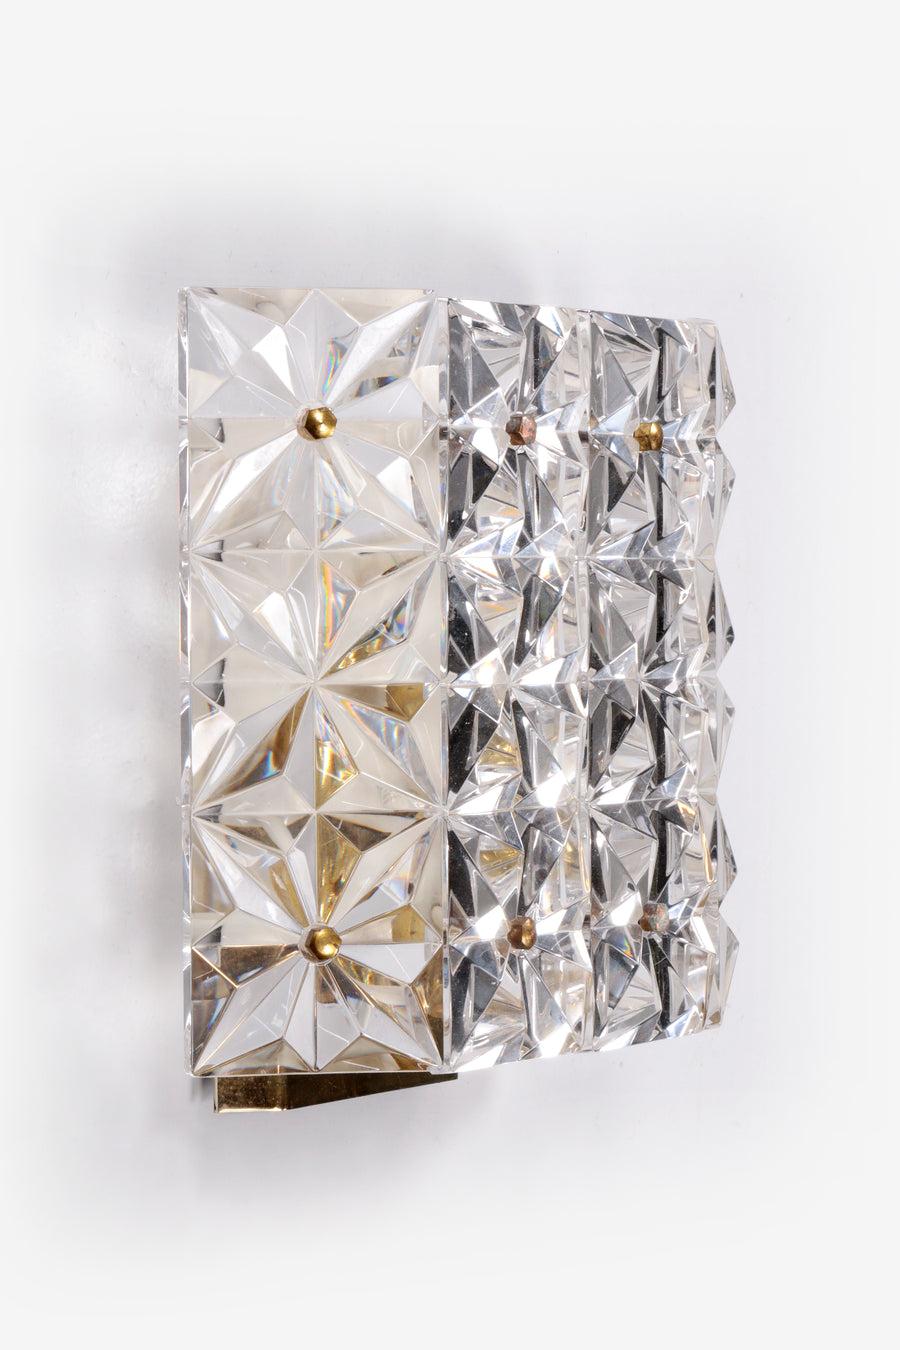 Hollywood Regency Original 1960s Kinkeldey Crystal Glass Brass Wall Lamp For Sale